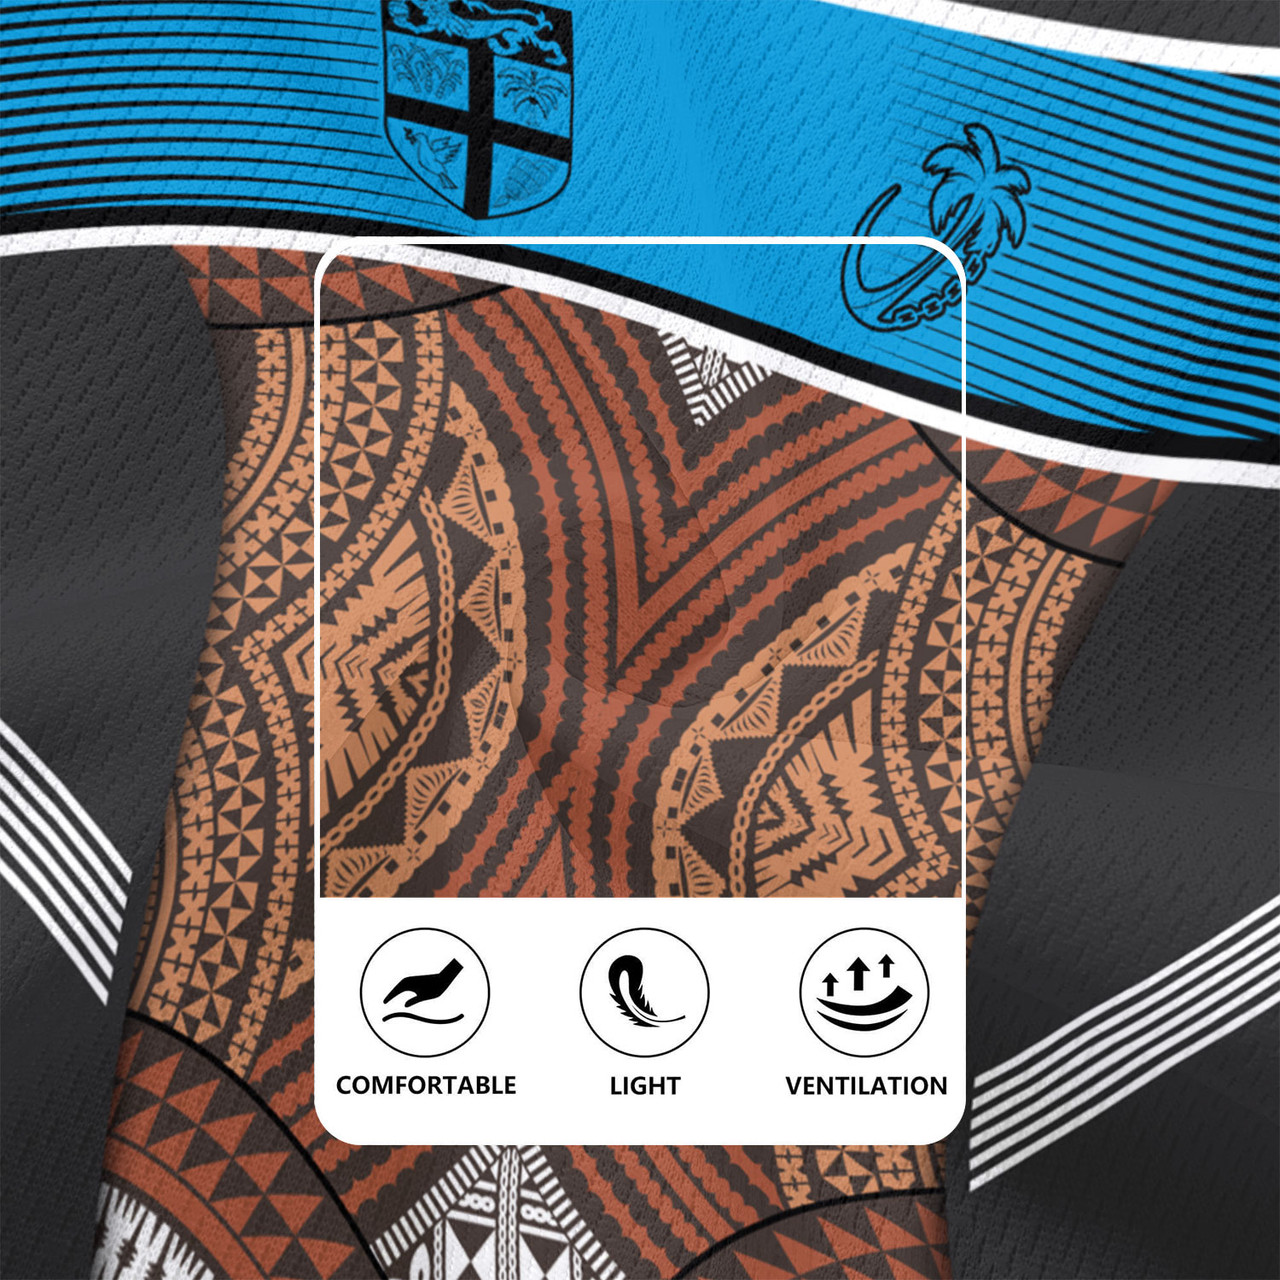 Fiji Rugby Jersey Custom Bula Fiji Rugby Tapa Design